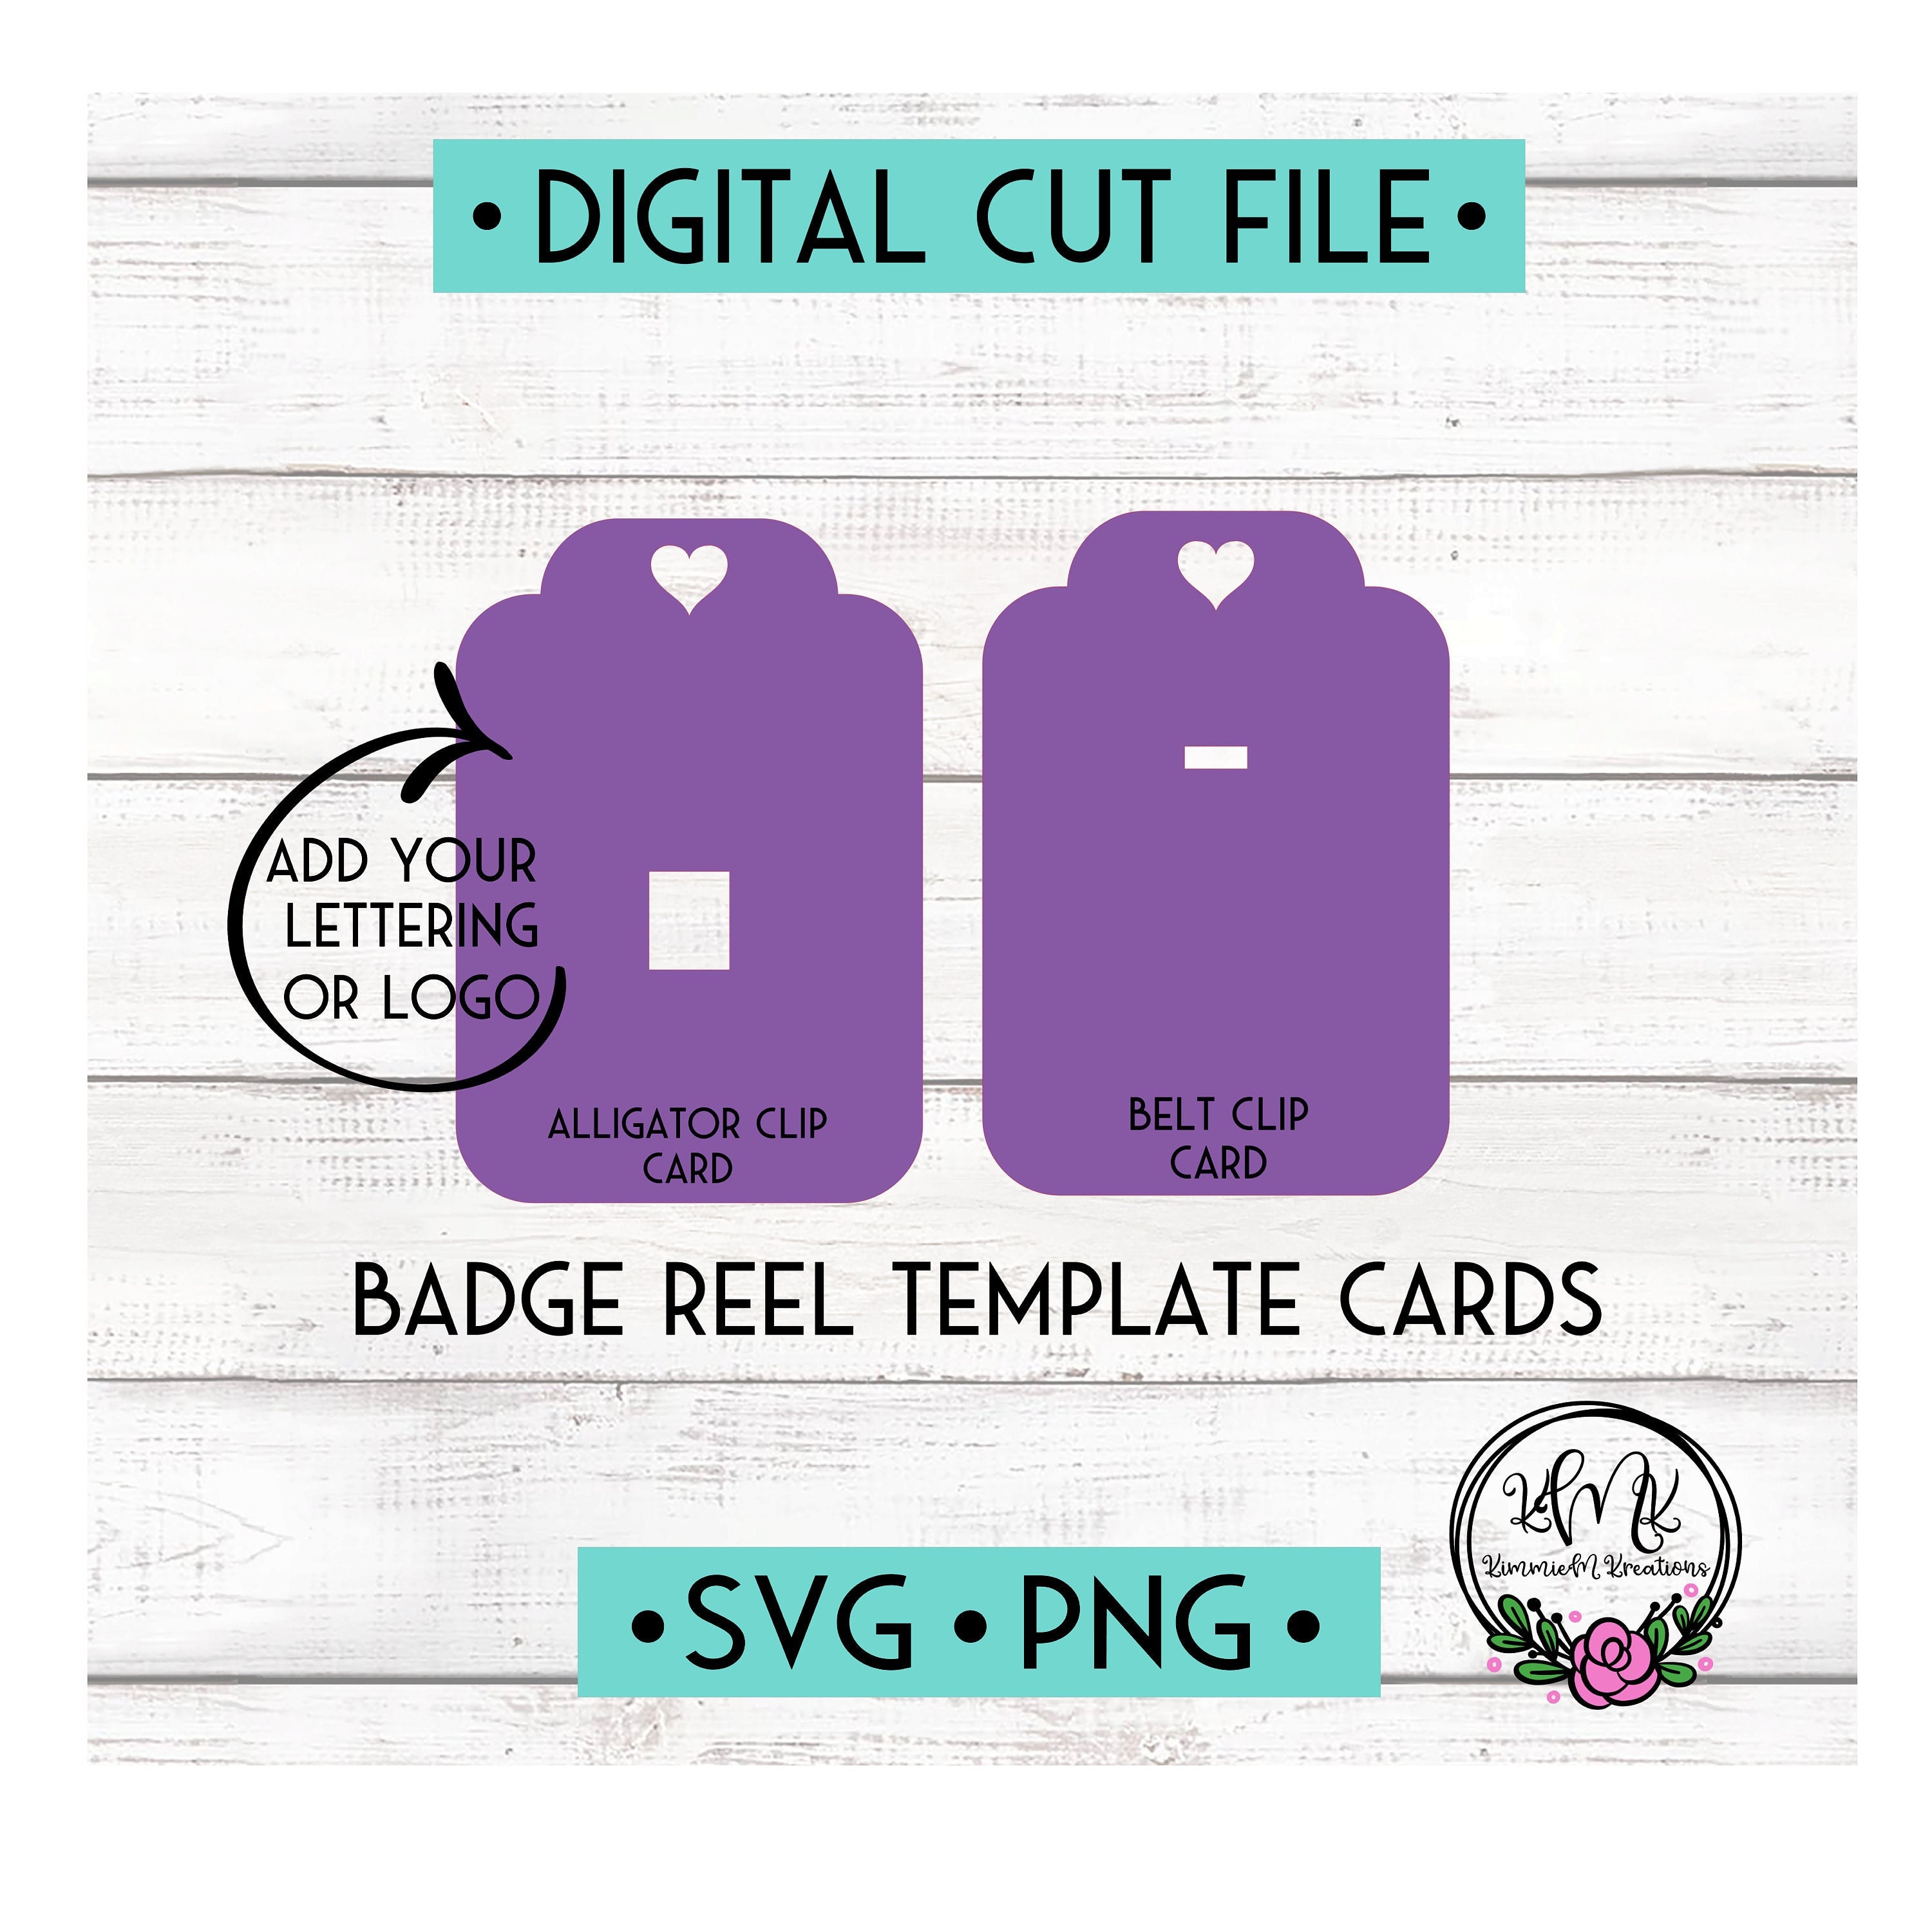 Flat Top Badge Reel Template Display Cards Alligator and Belt Clip